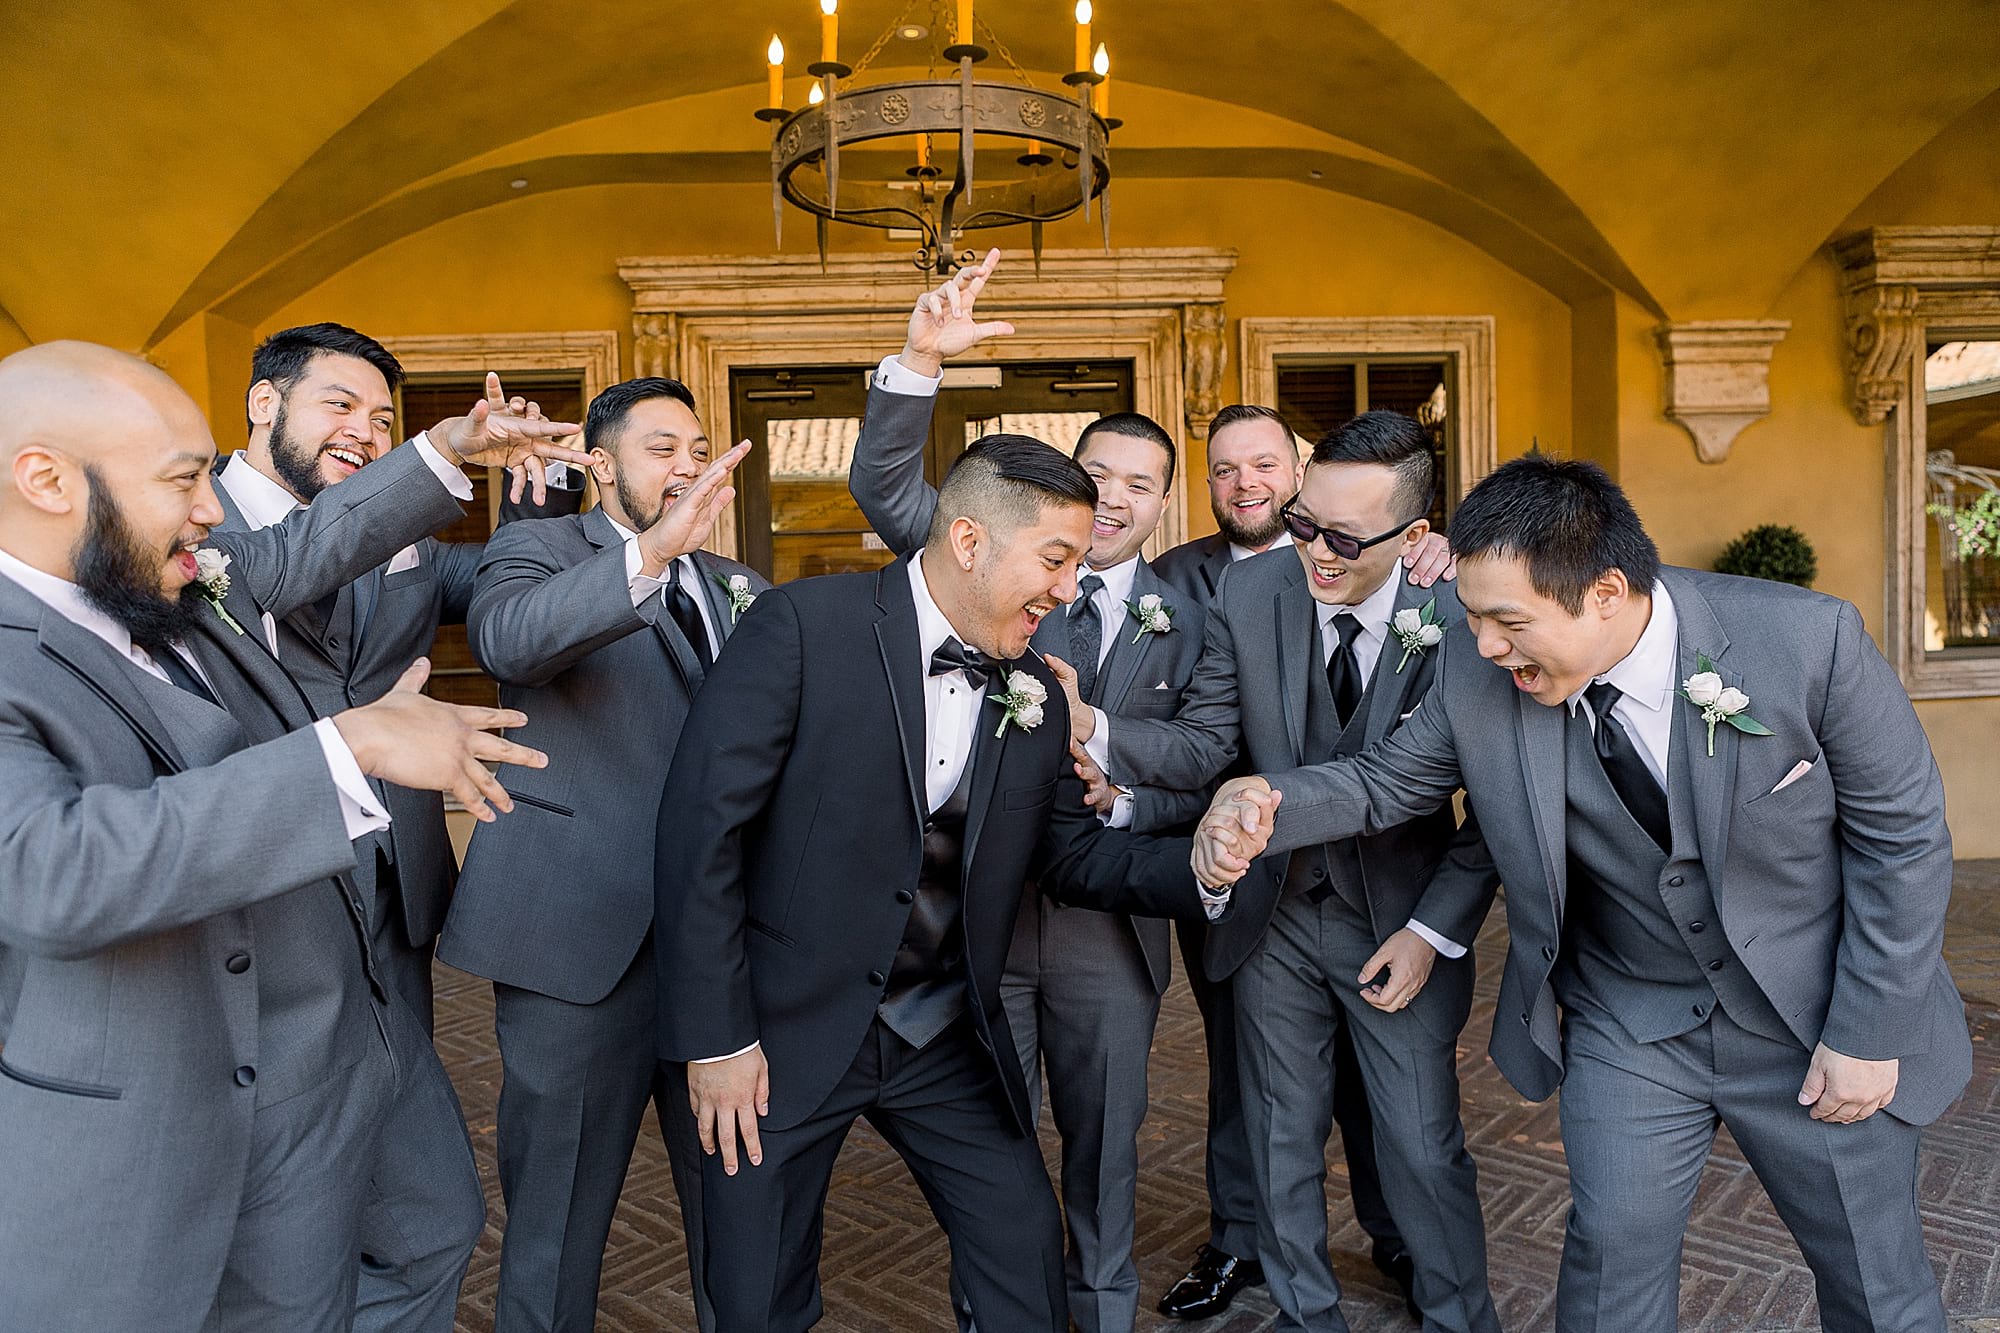 Elegant mauve and gray wedding photos at Villa Siena by Phoenix Arizona Wedding Photographers